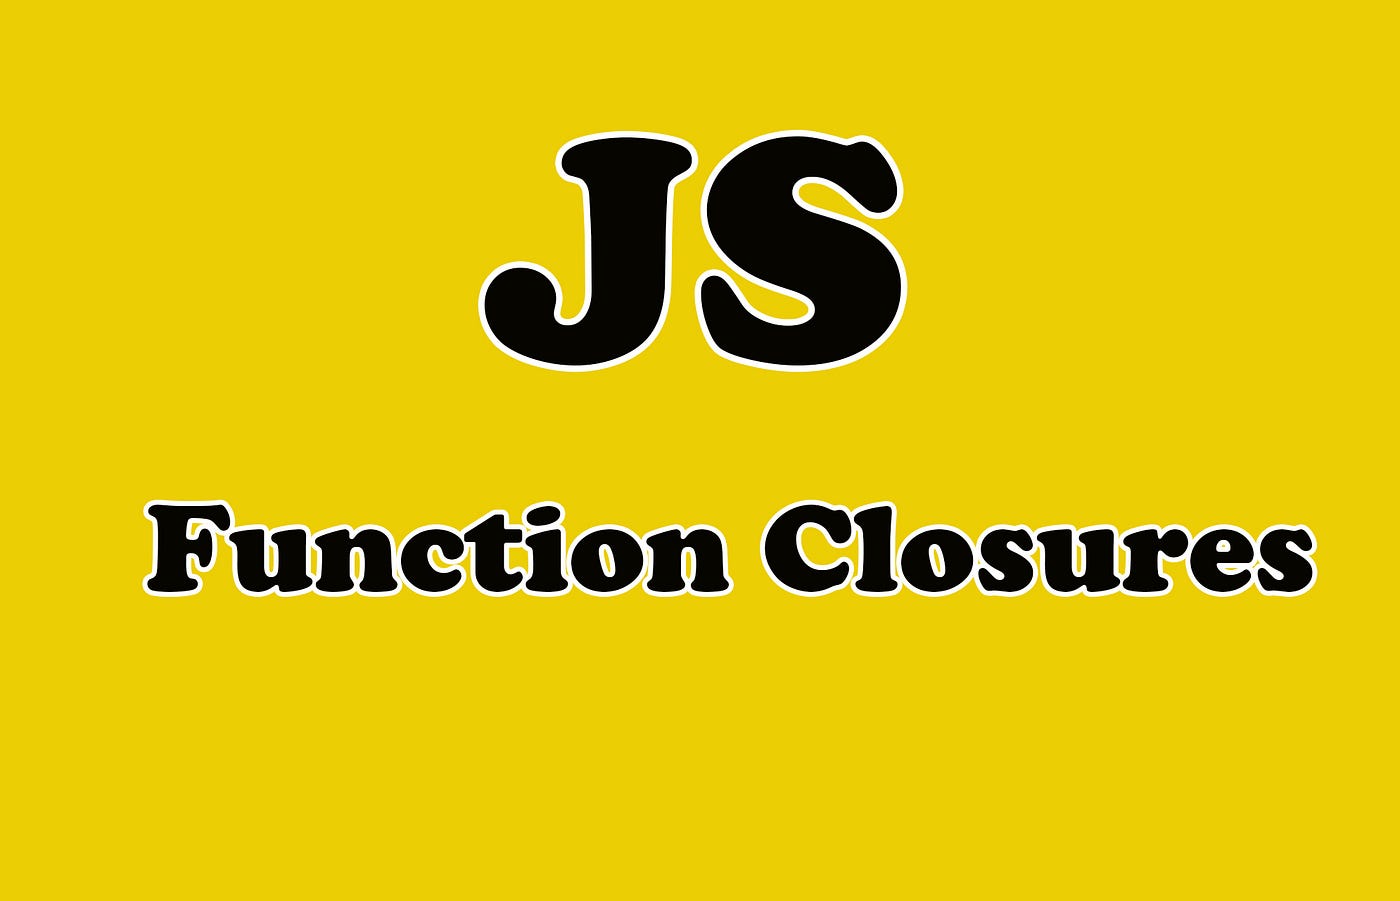 Understanding Function Closures in JavaScript